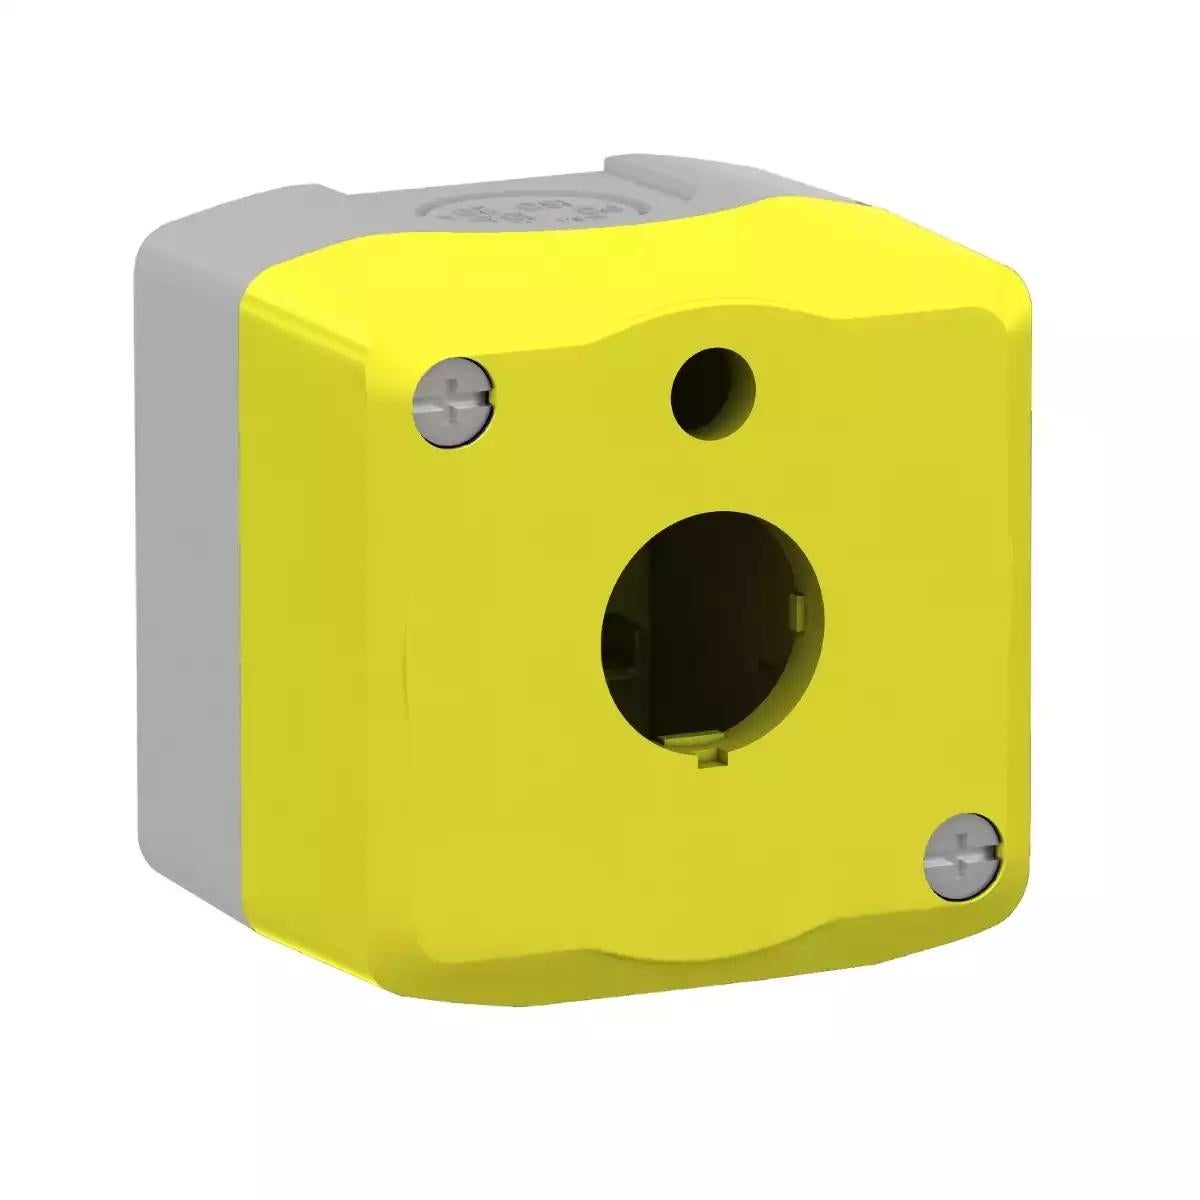 Schneider Electric Harmony XALD, XALK empty box yellow color for illuminated e.stop 1 hole